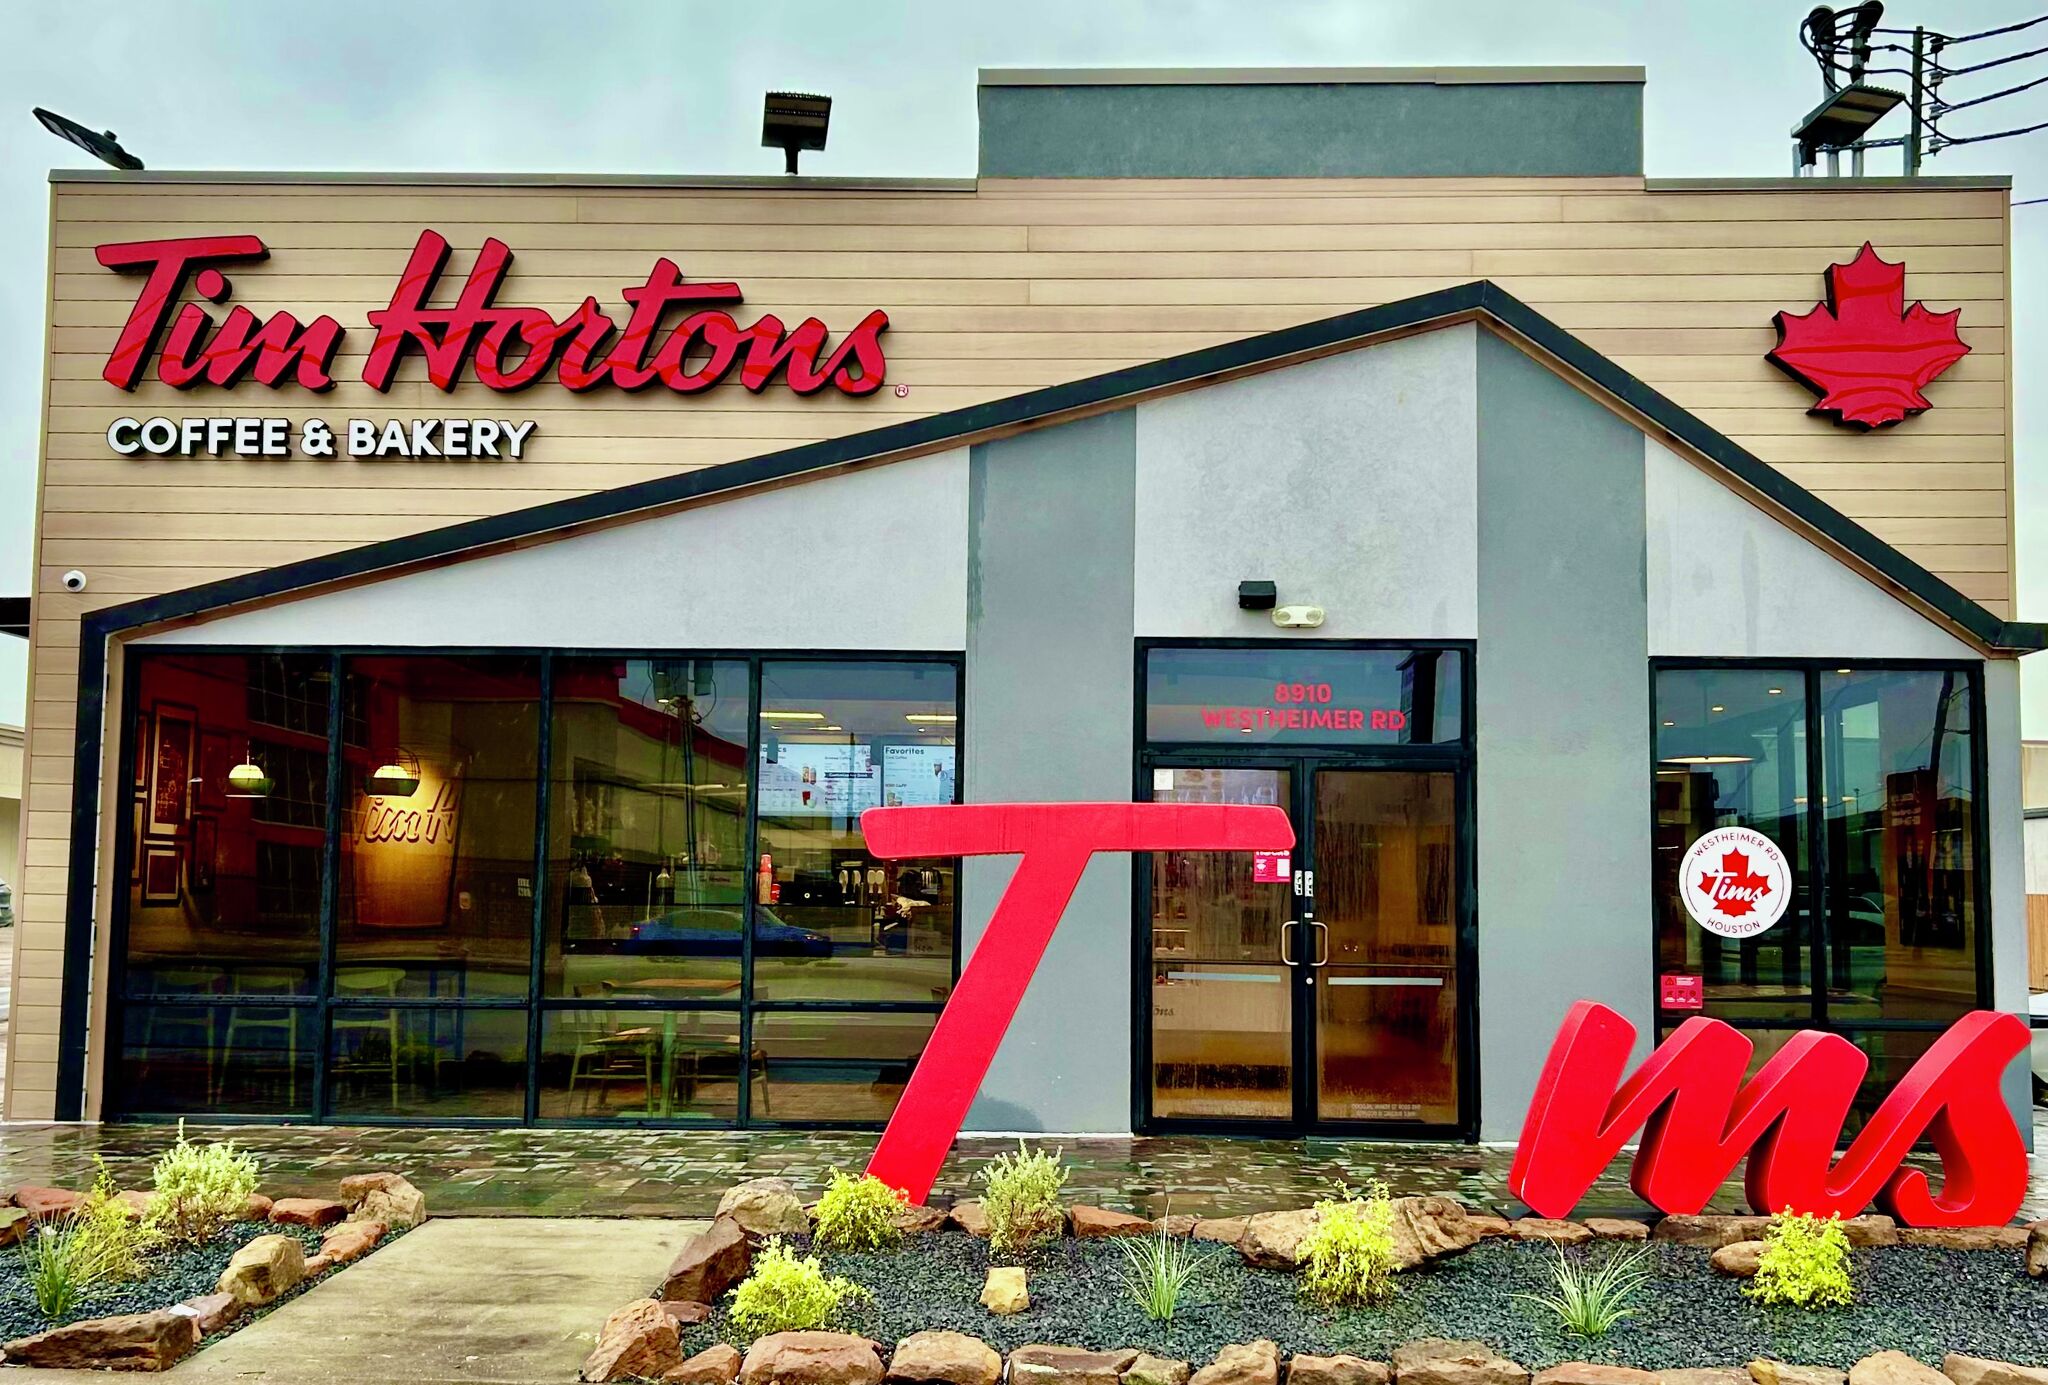 First Look: Tim Hortons Café & Bake Shop